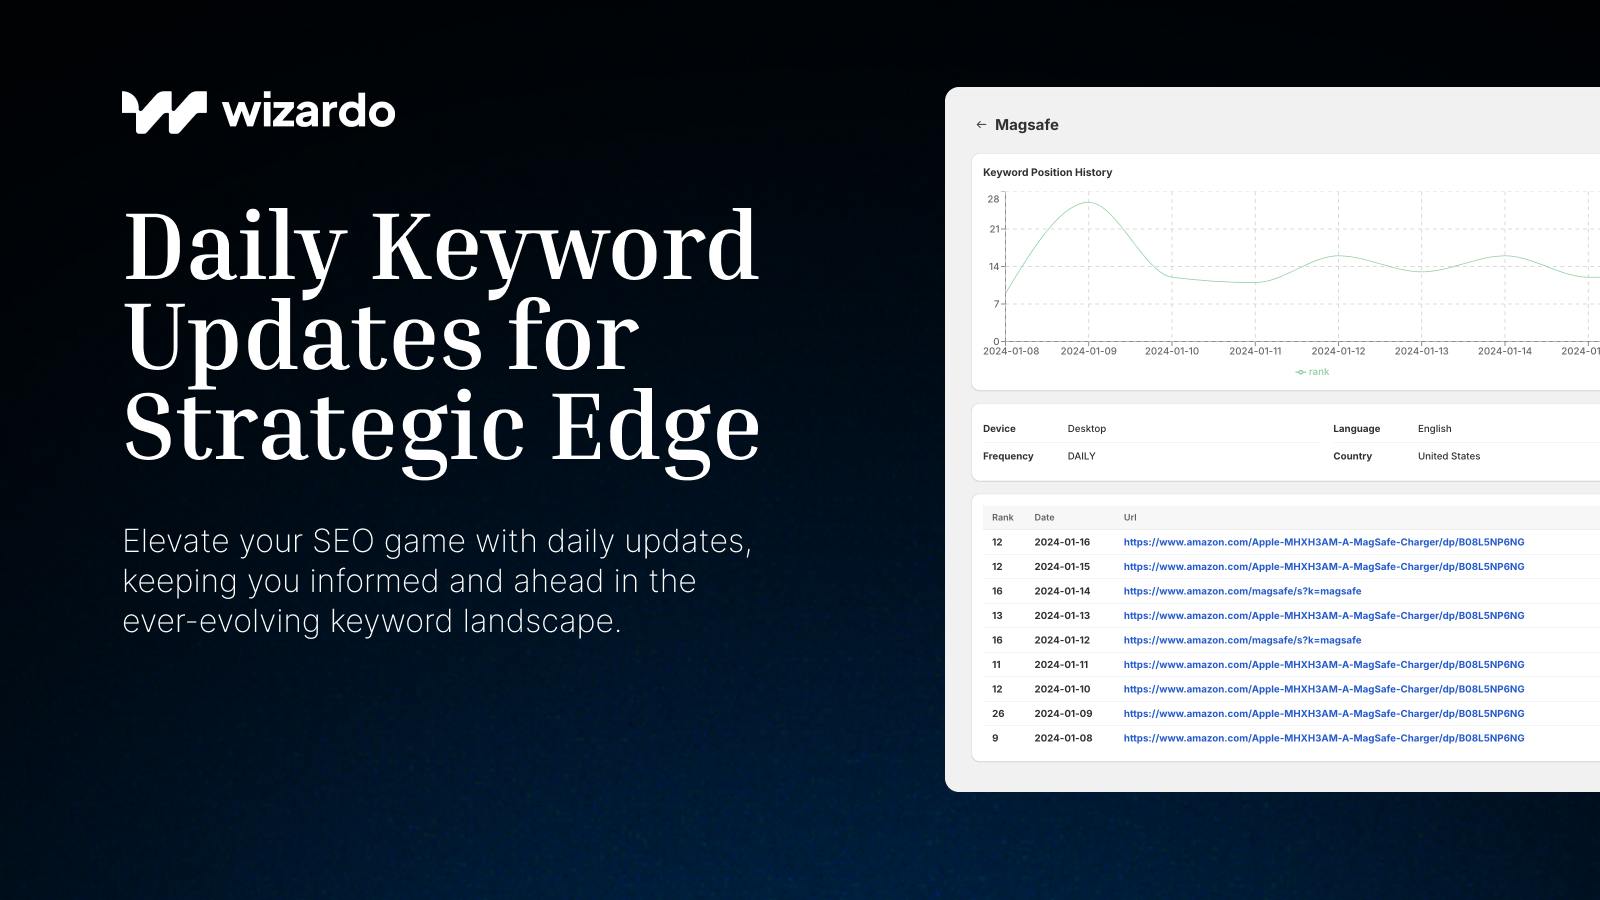 Wizardo: Daily Keyword Updates for Strategic Edge